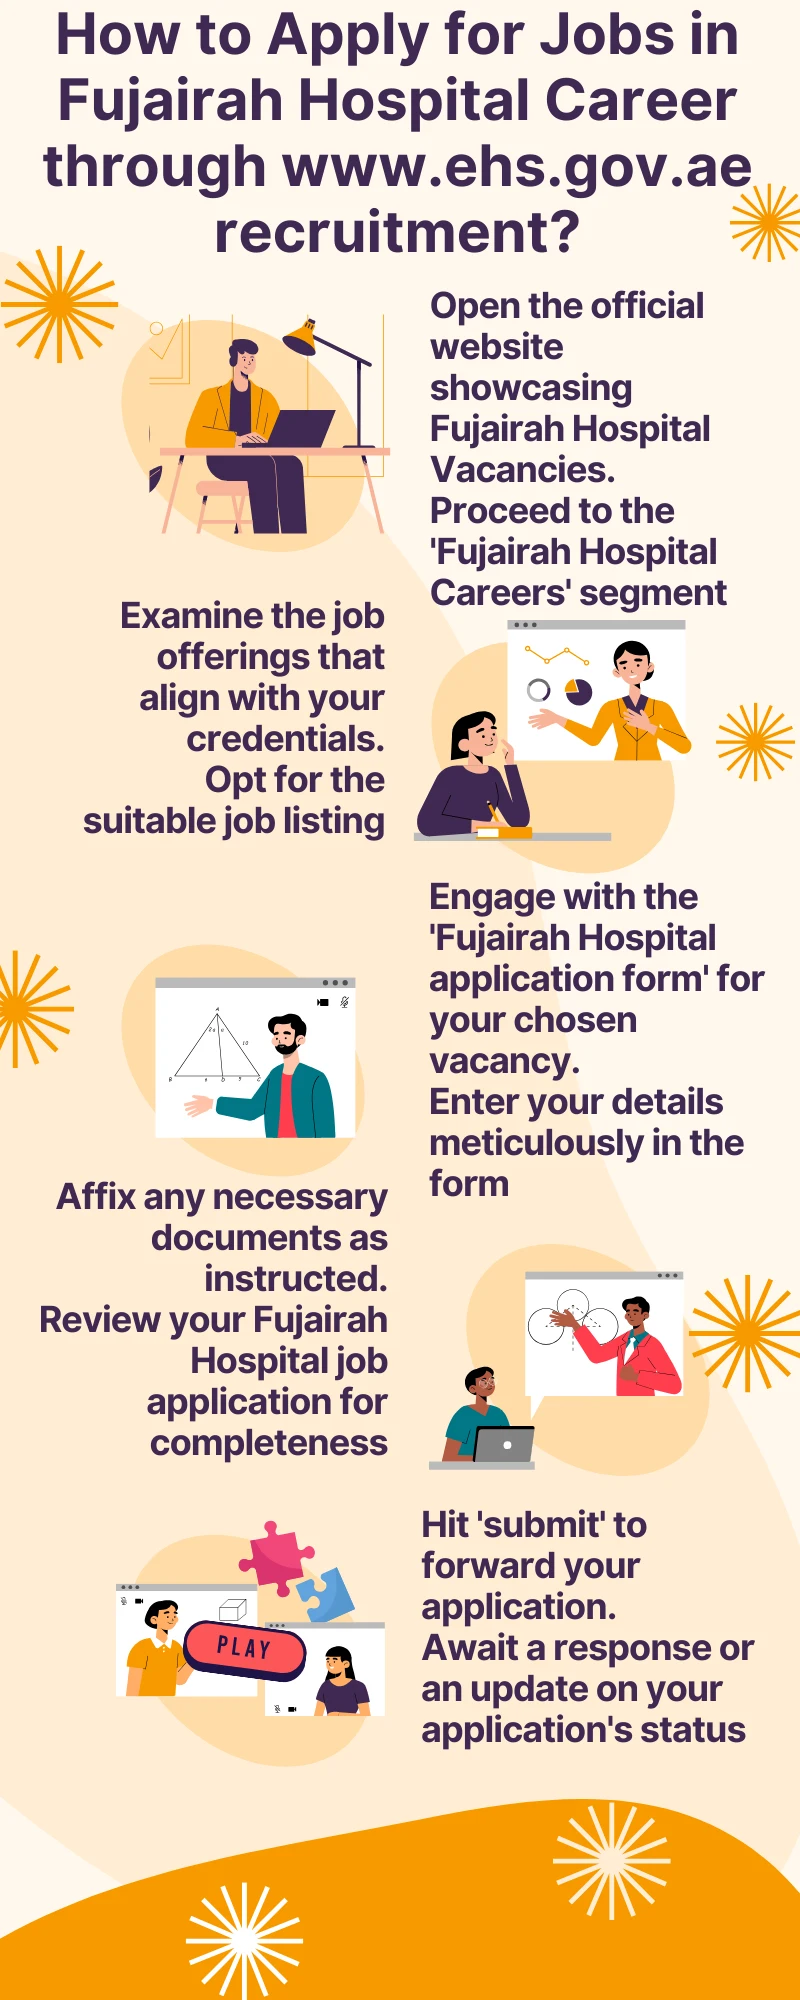 How to Apply for Jobs in Fujairah Hospital Career through www.ehs.gov.ae recruitment?